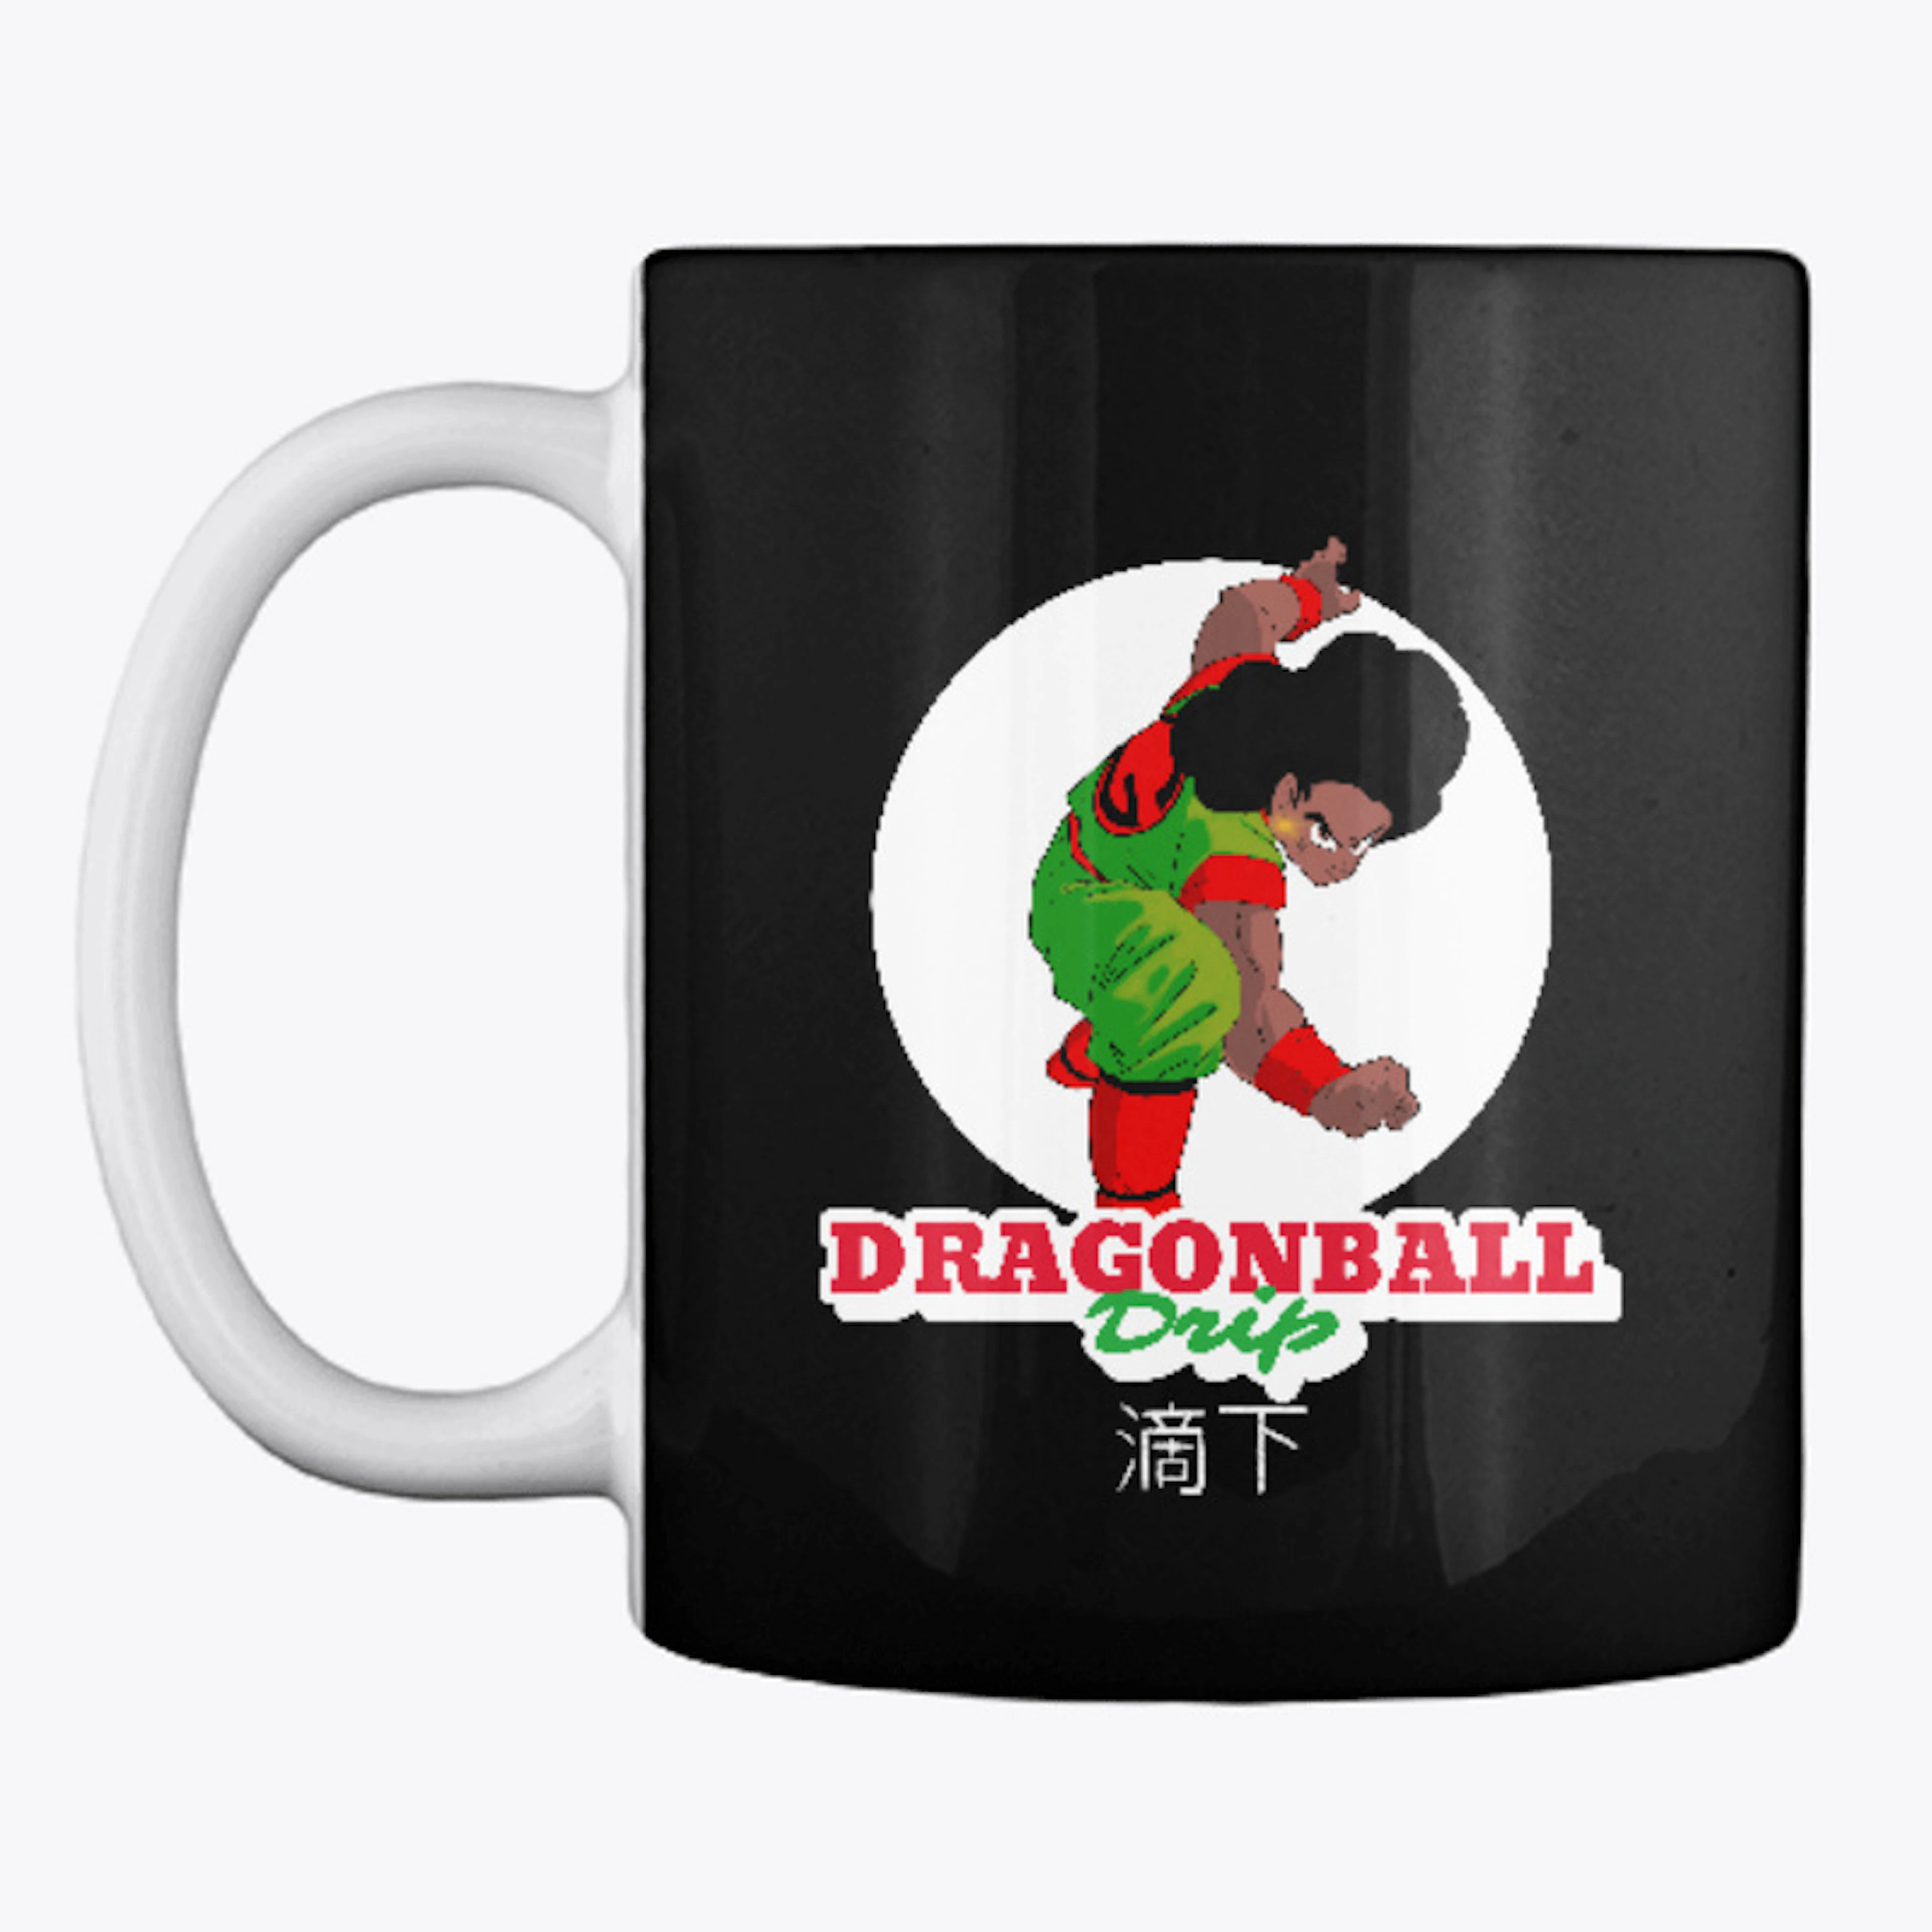 Dragonball Drip